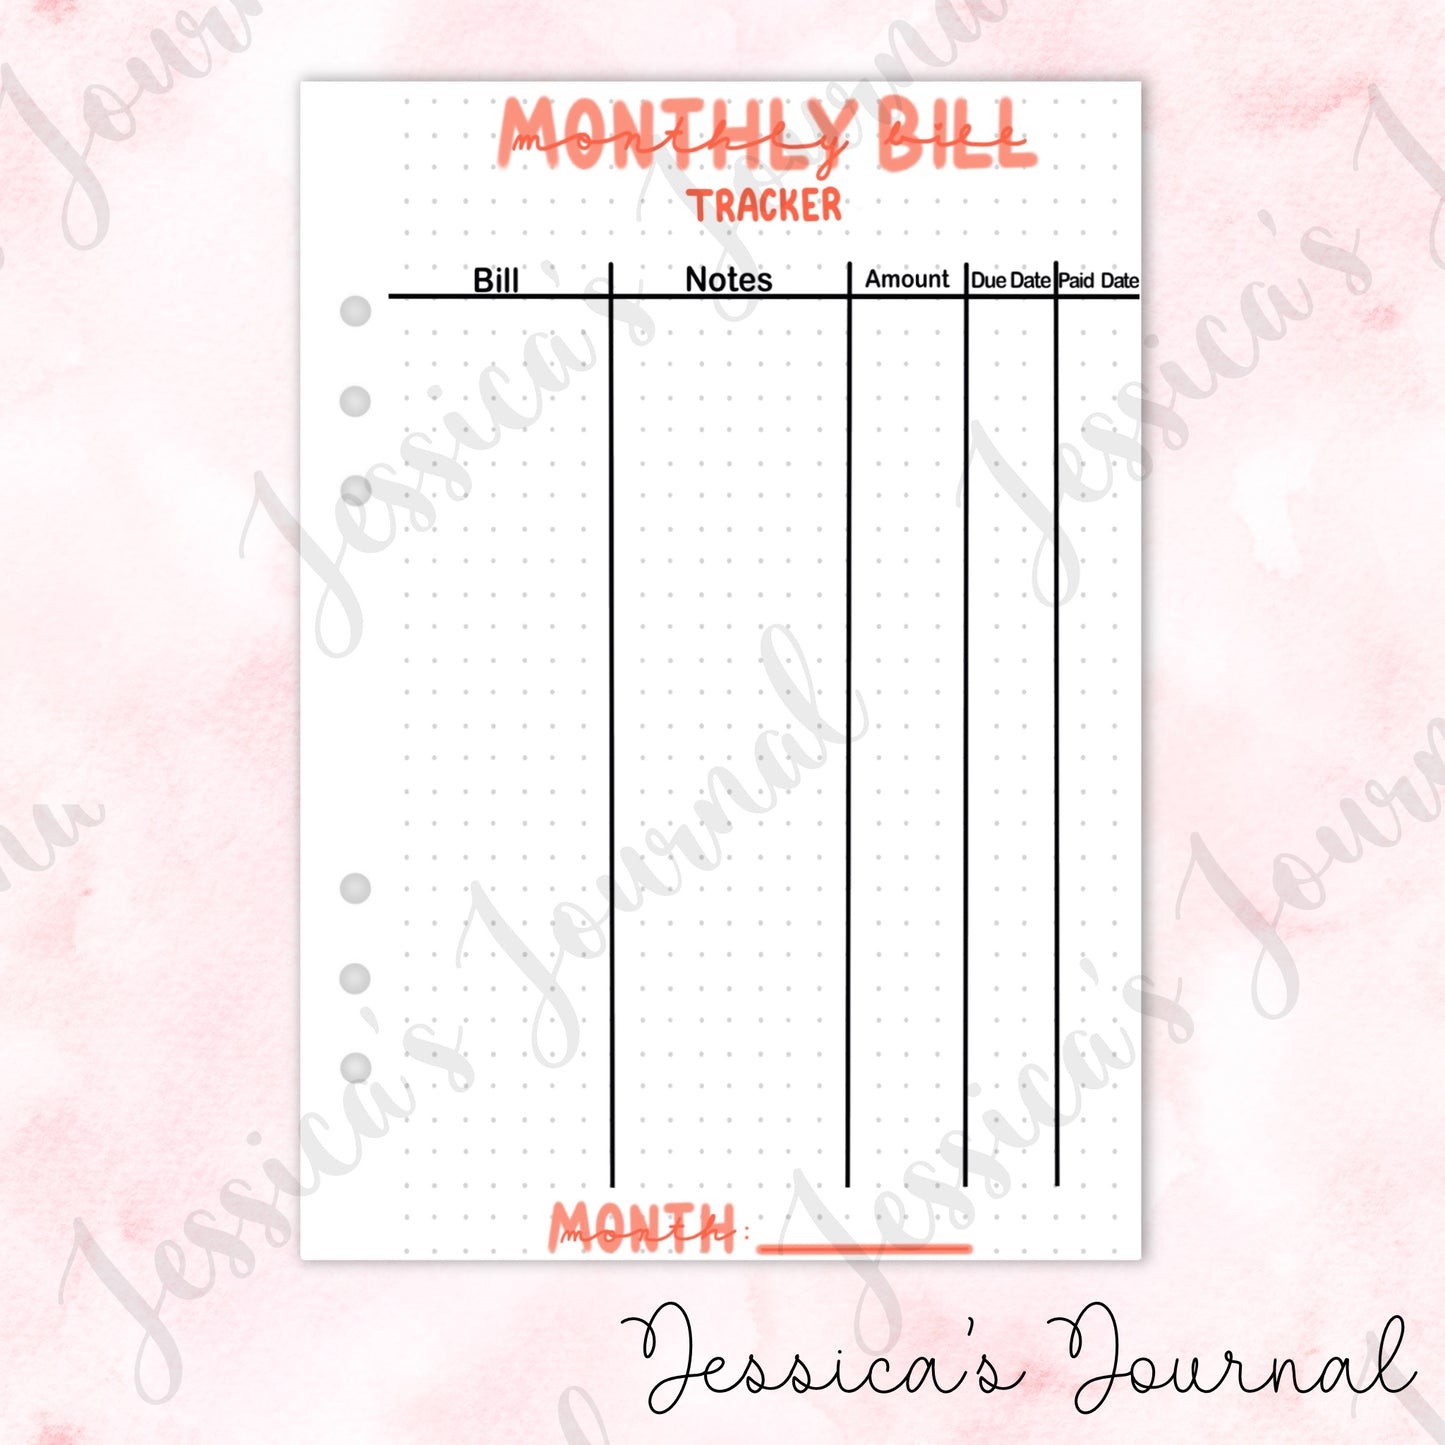 Monthly Bill Tracker | Journal Spread